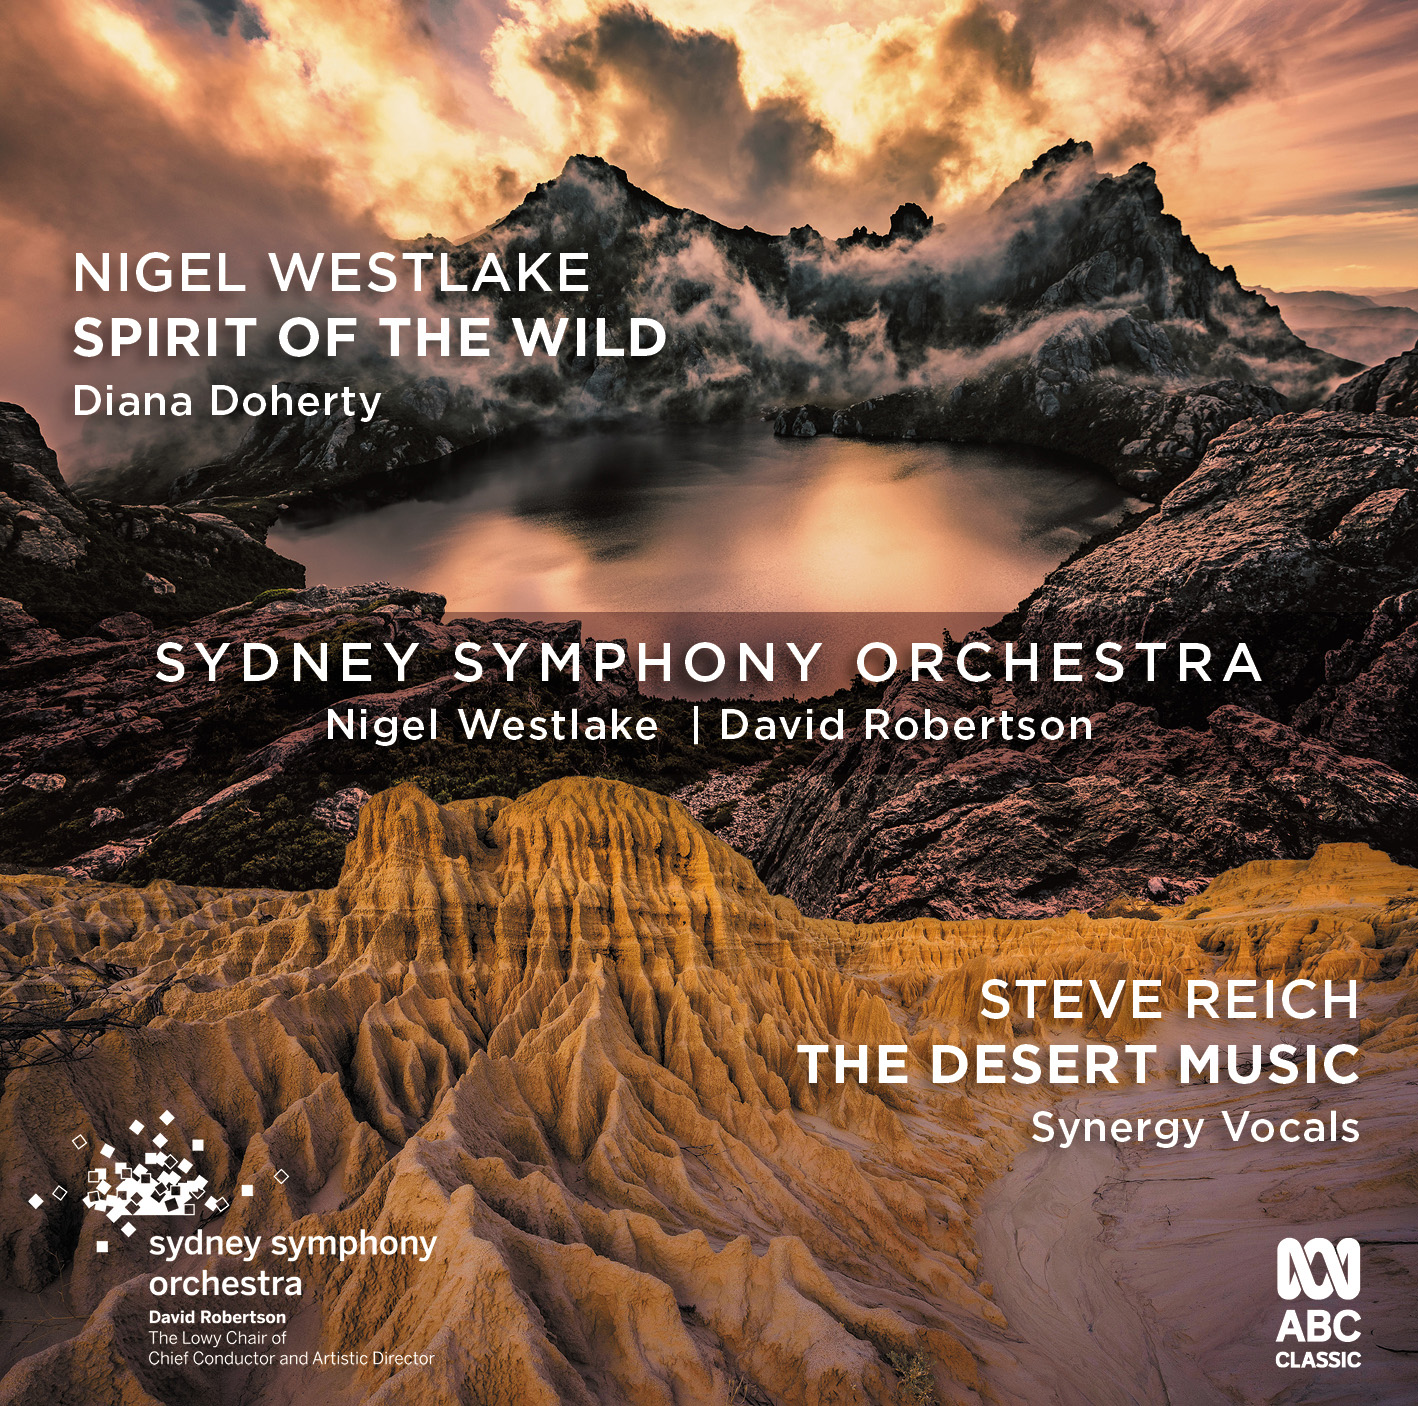 Nigel Westlake, Spirit of the Wild, Sydney Symphony Orchestra